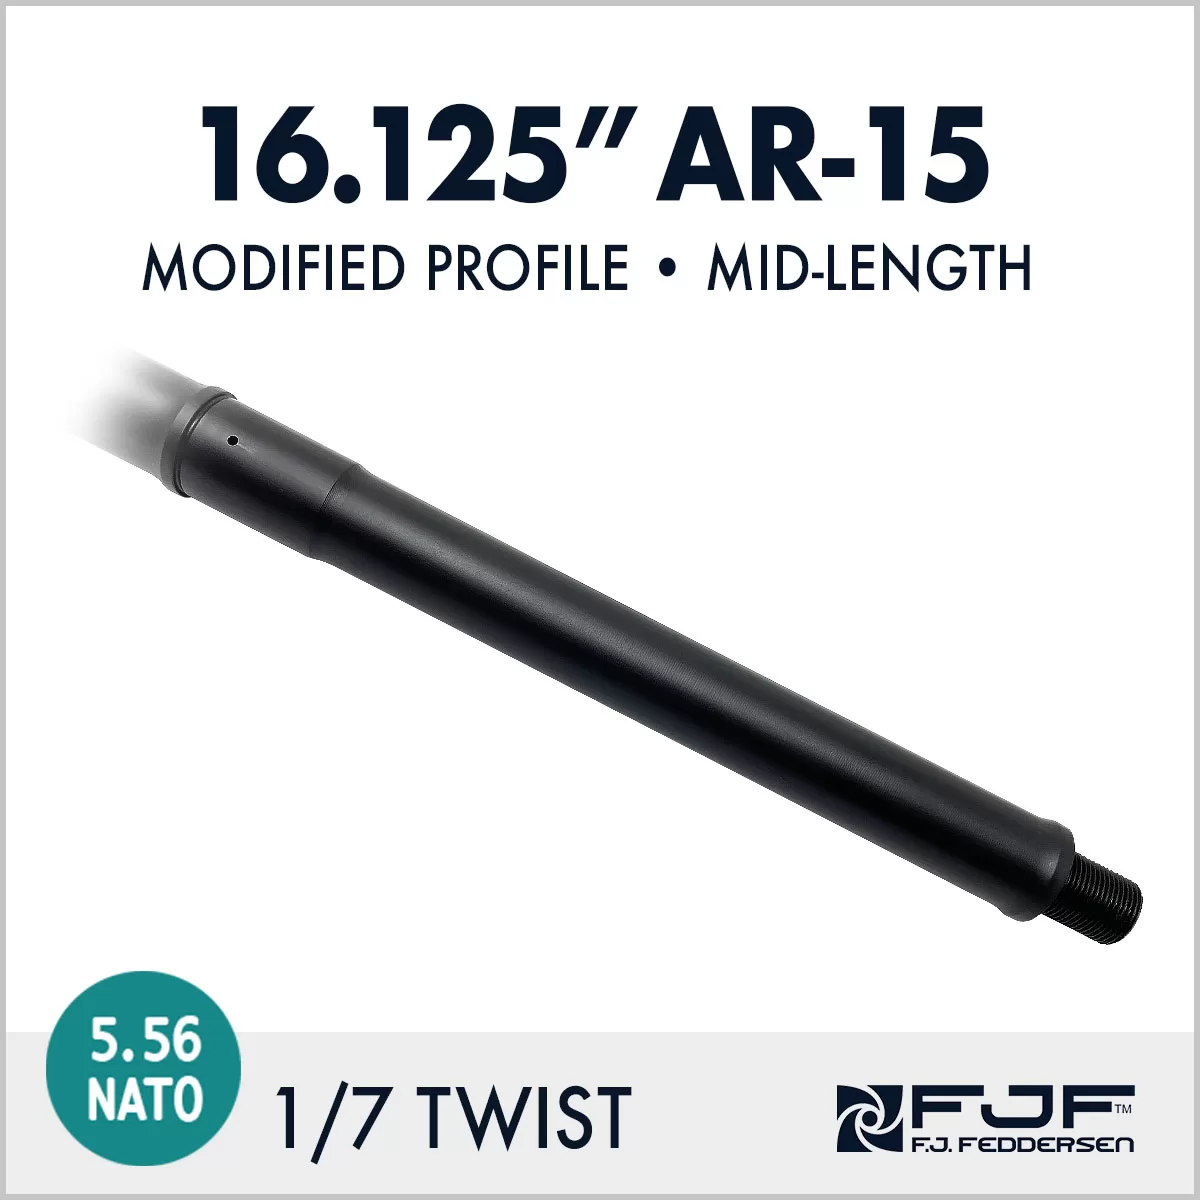 AR-15 Barrel by FJ Feddersen - Modified Profile - 16.125" Mid-length